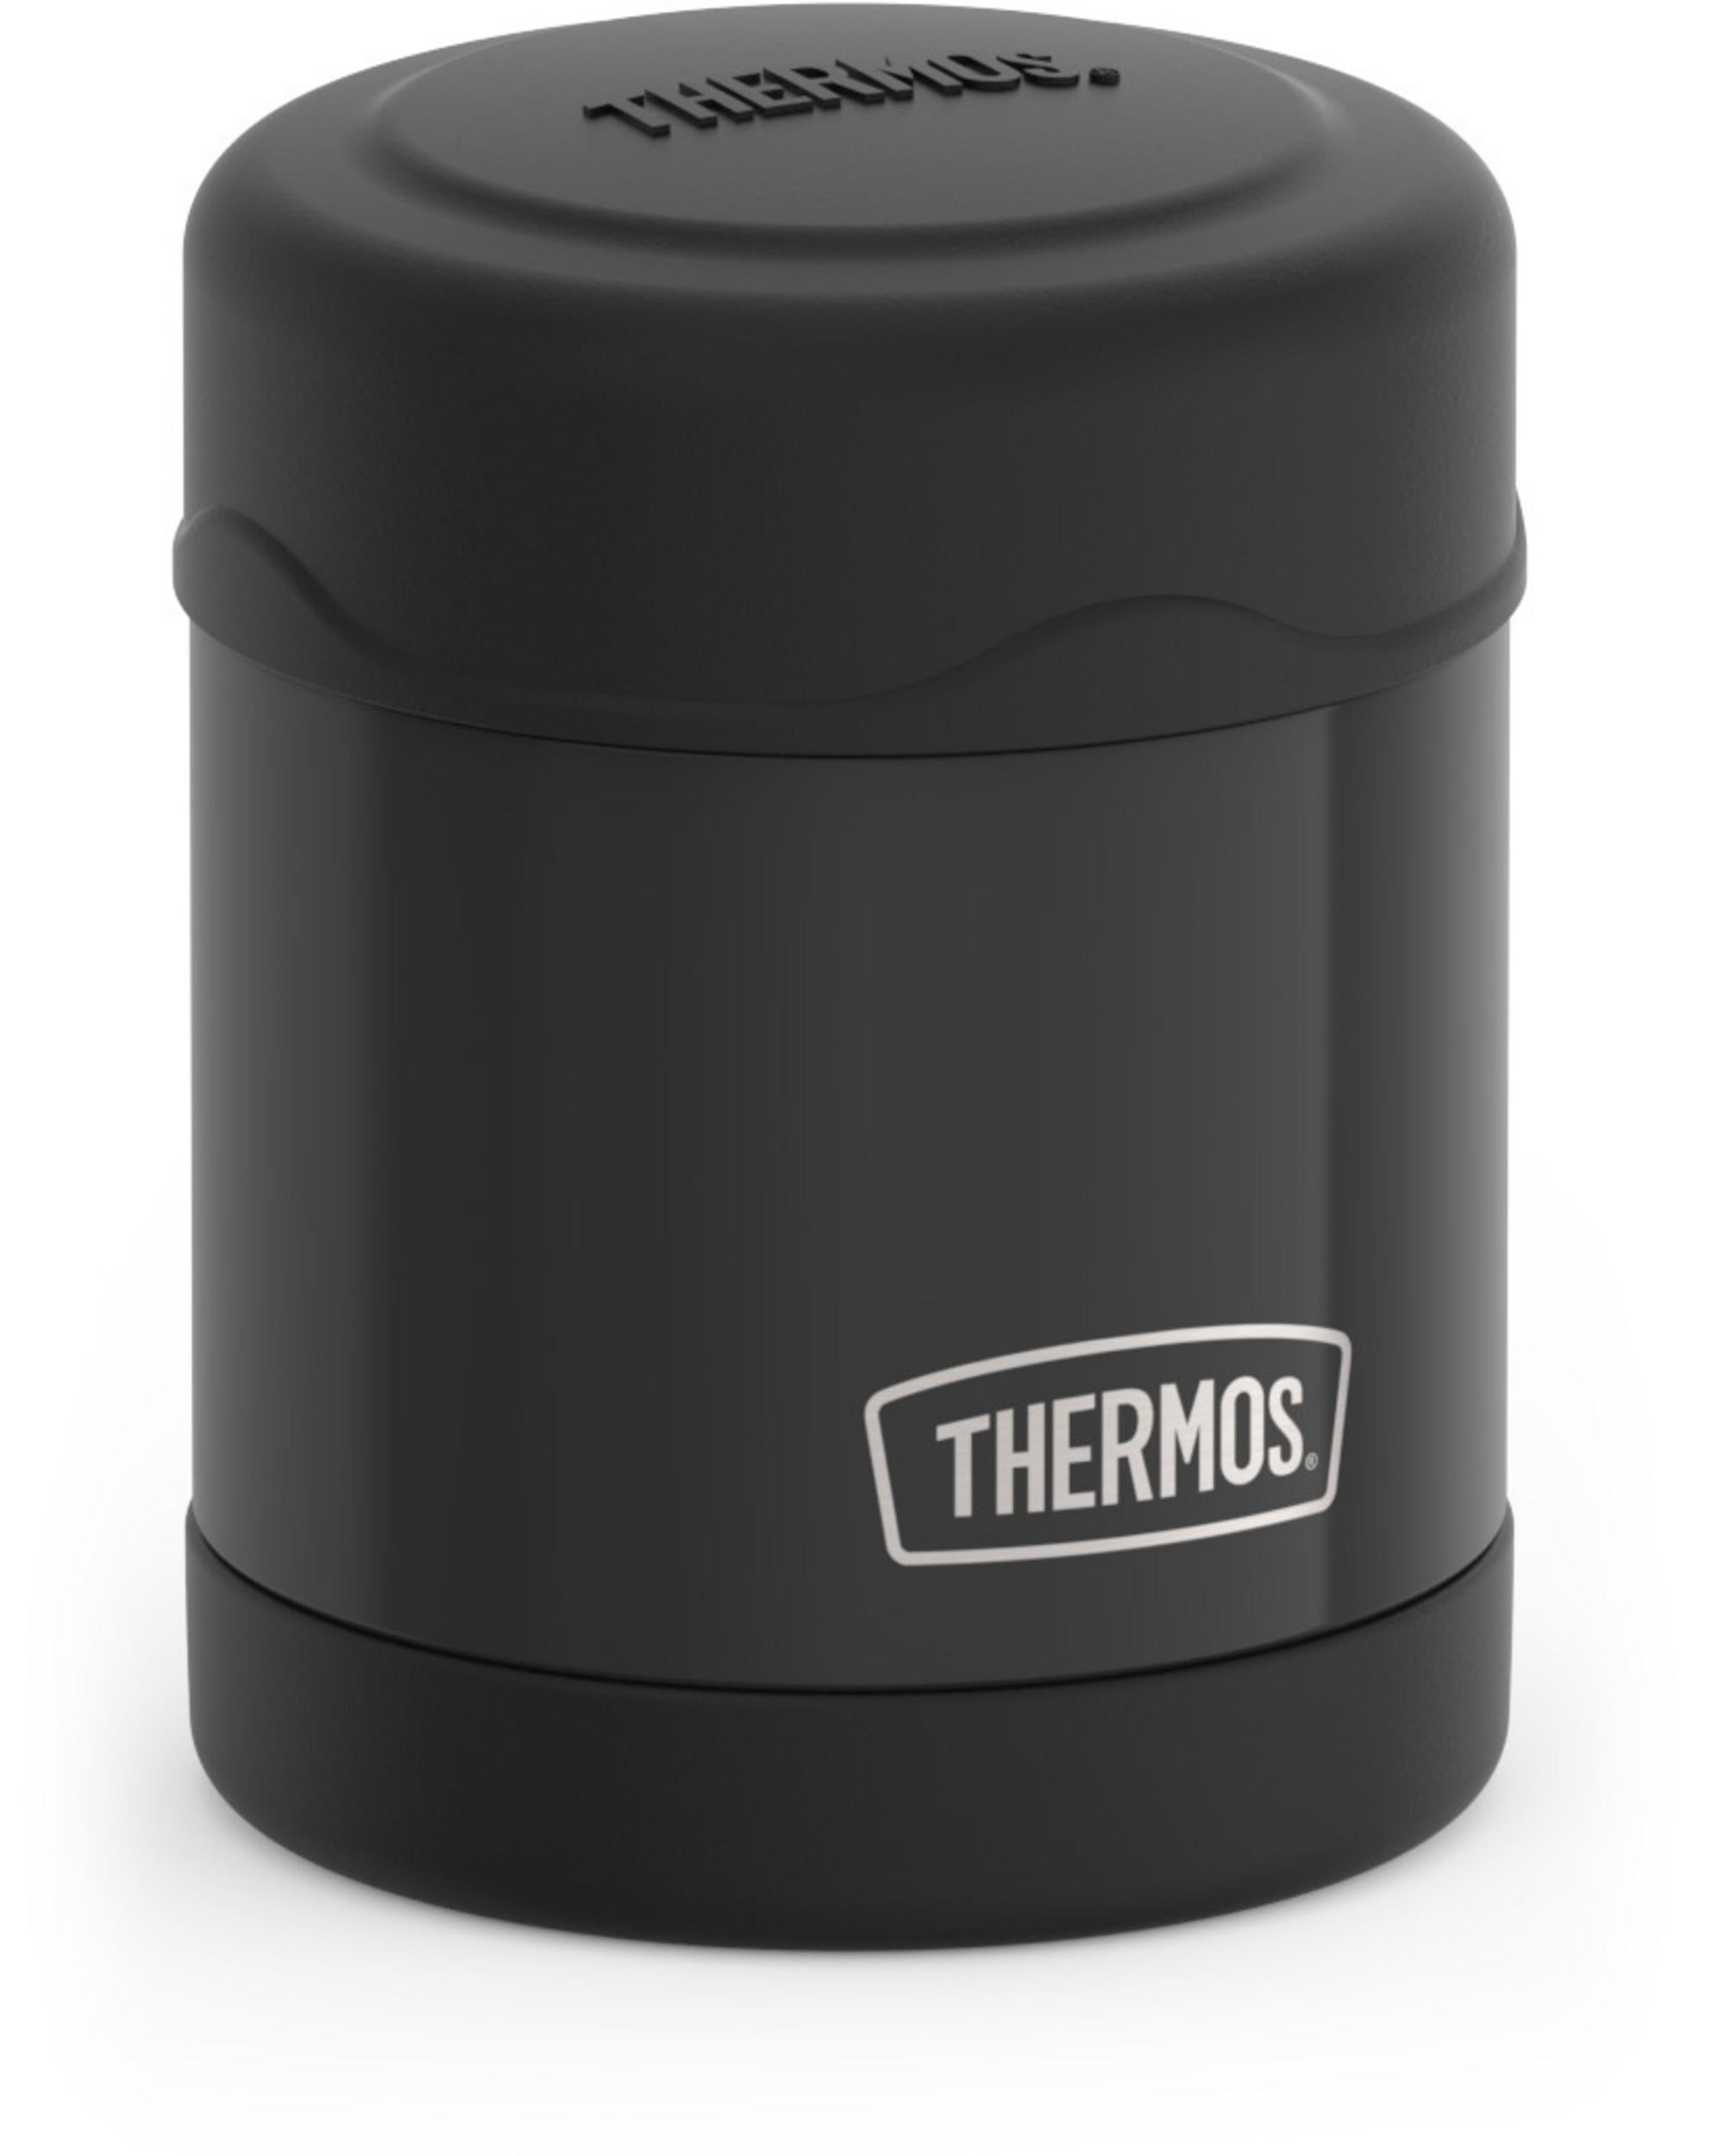 Thermos Stainless Steel Food Jar - Blue, 10 oz - Ralphs